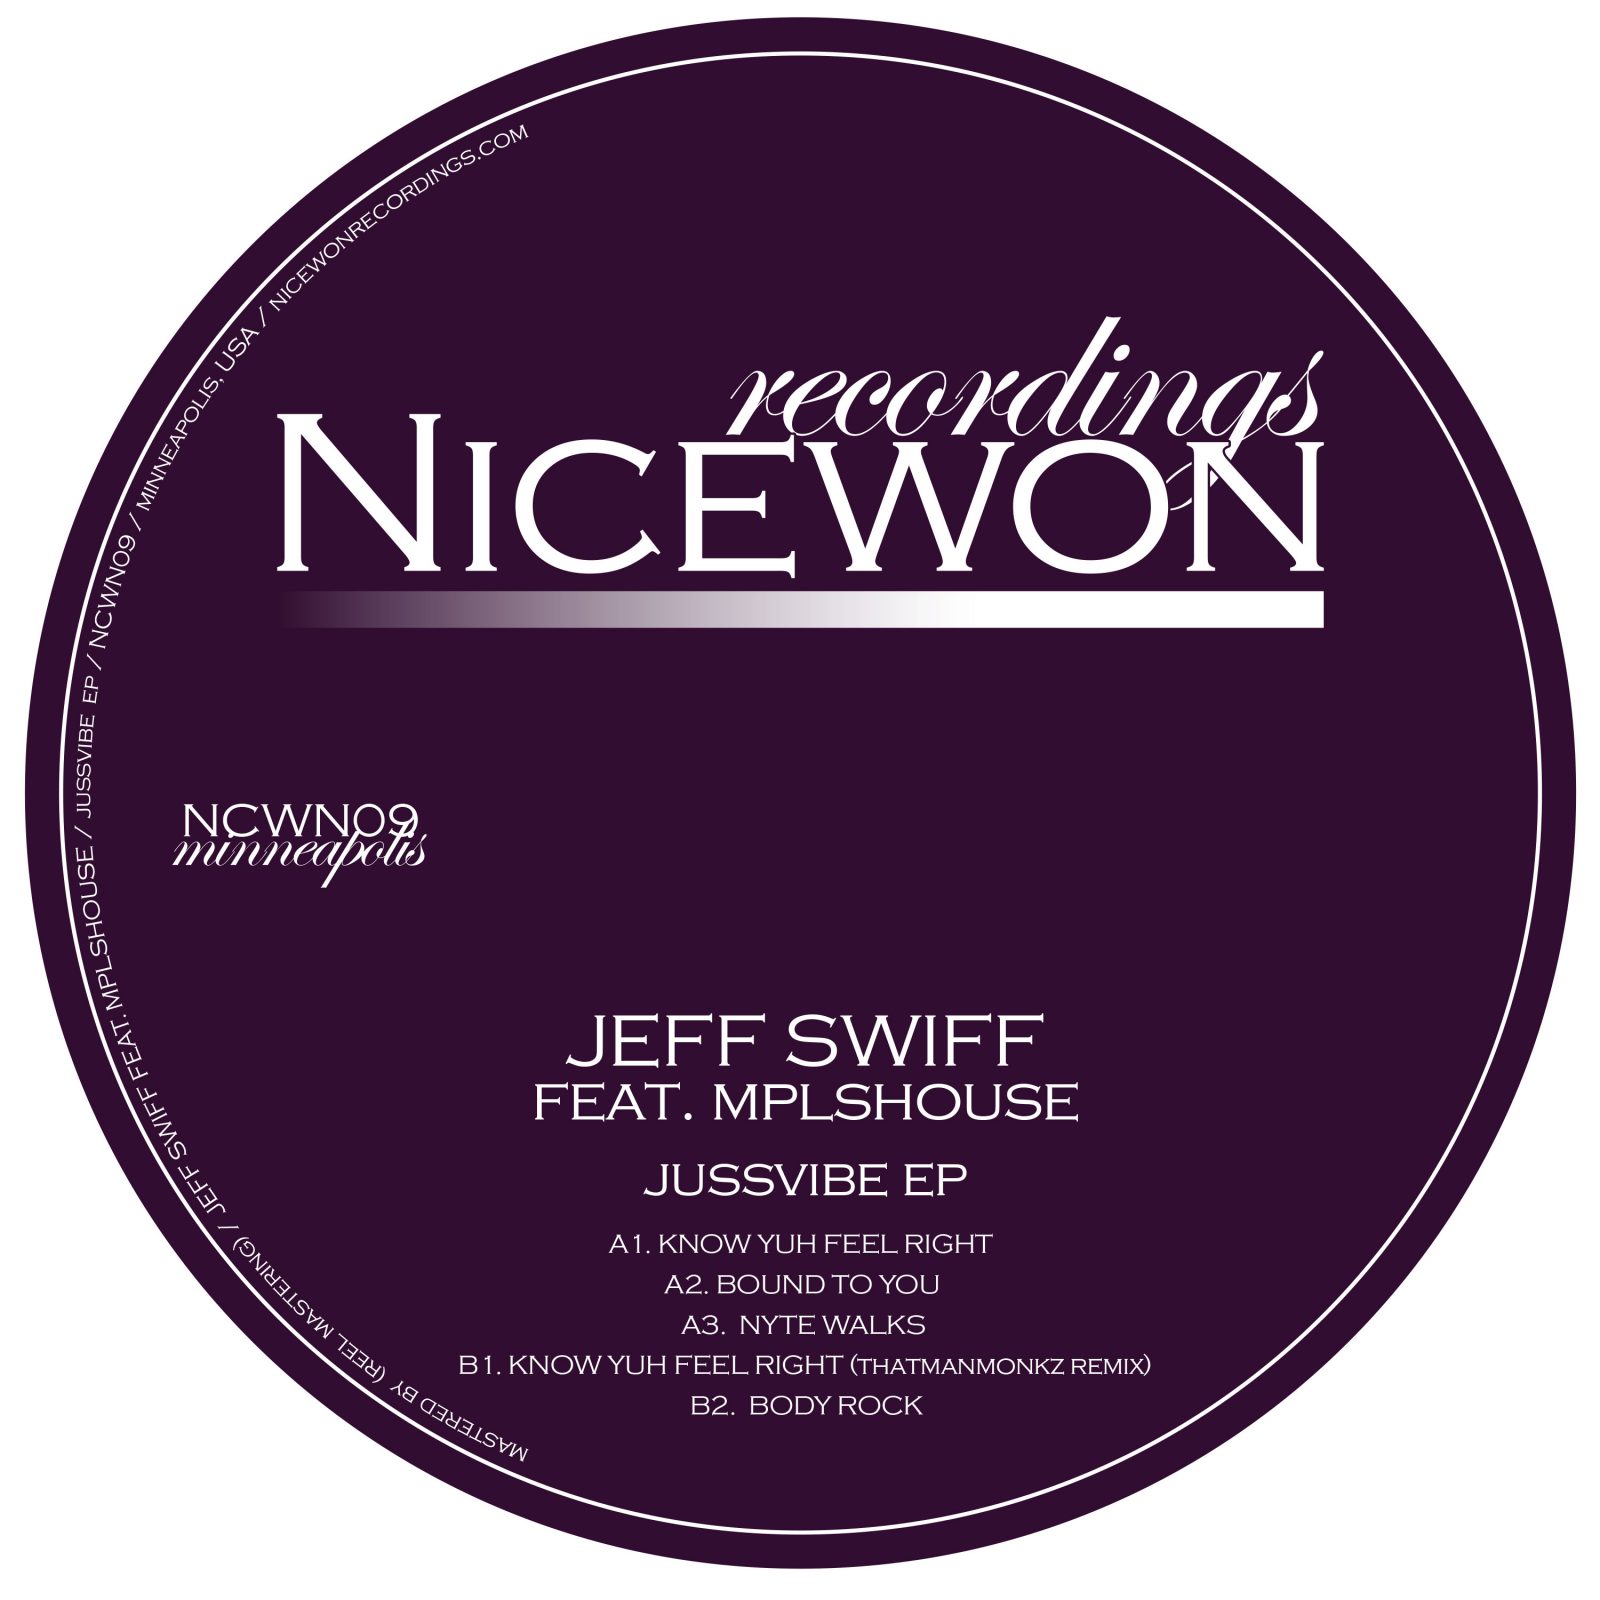 Jeff Swiff feat MPLSHOUSE - Jussvibe EP [Nicewon Recordings]